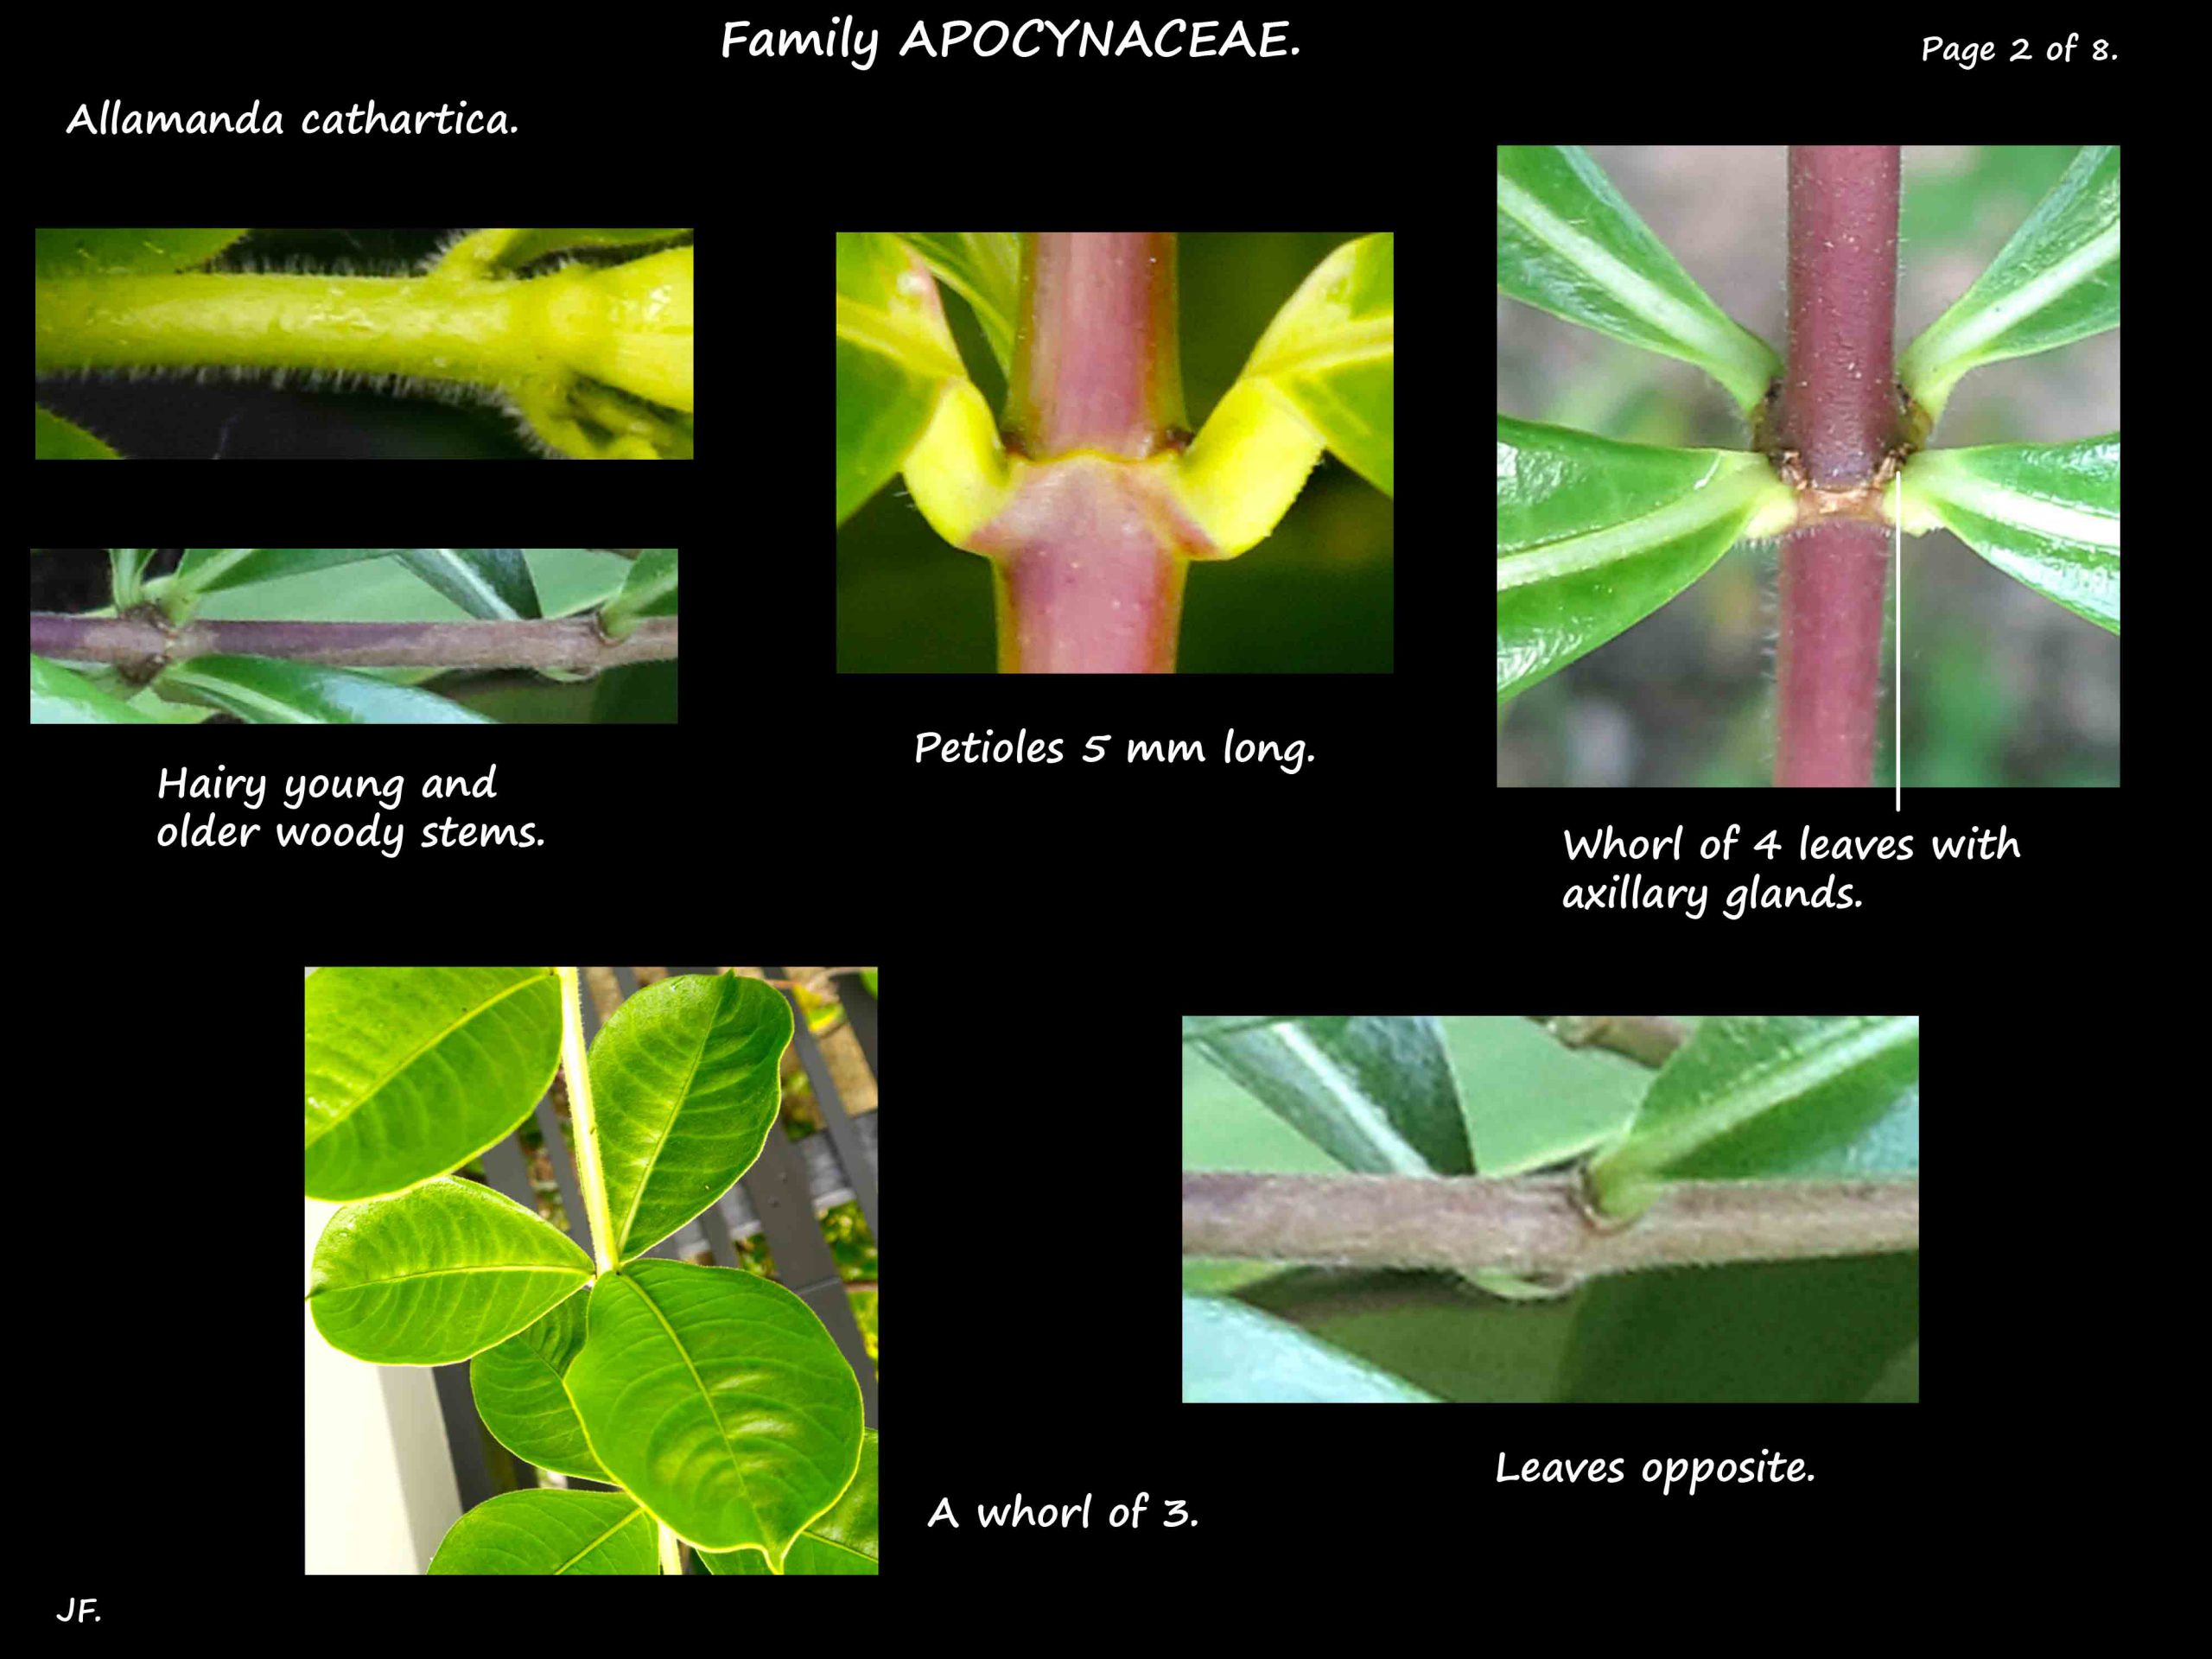 2 Leaf arrangement in Allamanda cathartica